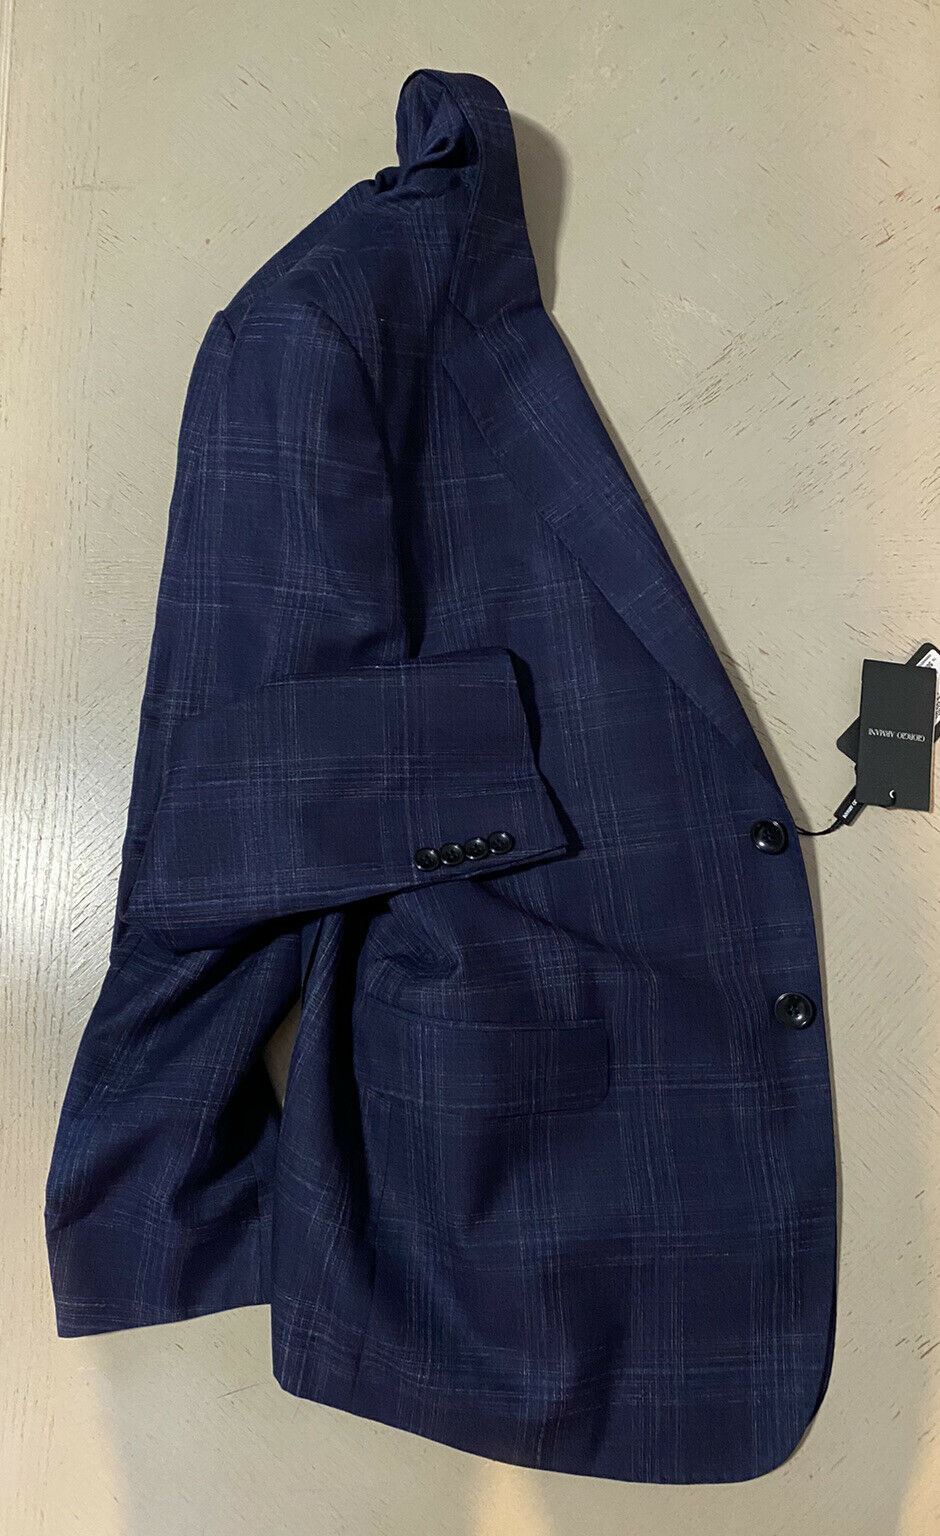 NWT $2395 Giorgio Armani Men Sport Coat Jacket Blazer DK Blue 40R US/50R Eu